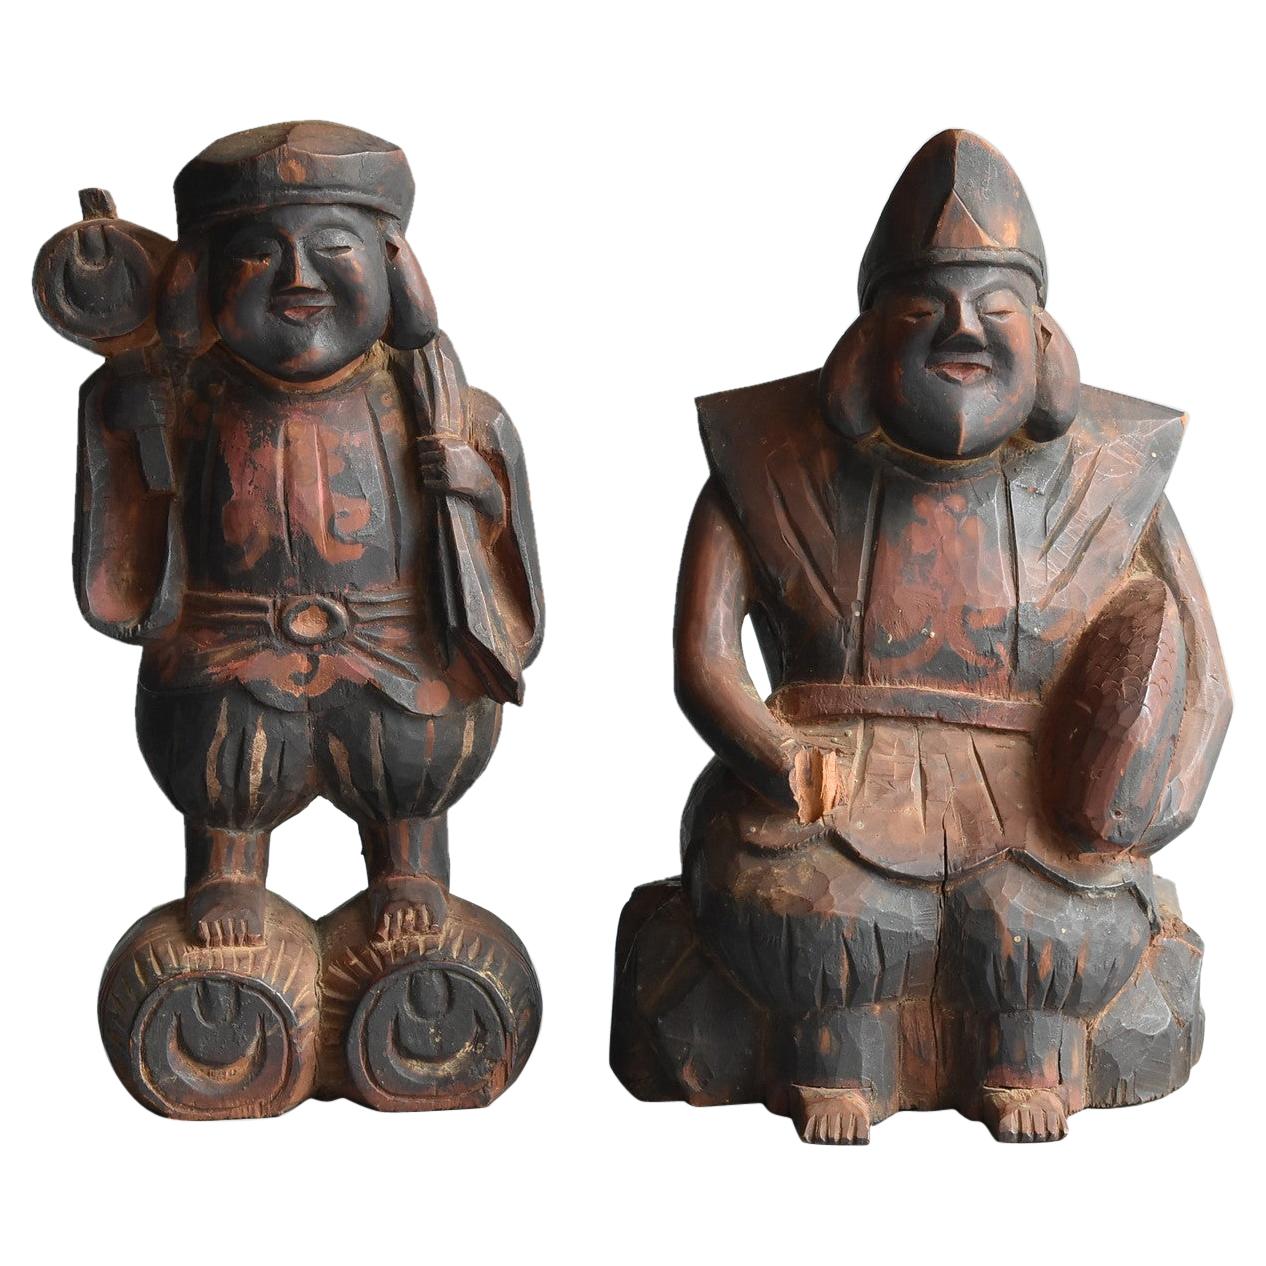 Antique Wooden Sculptures of Japanese Gods / Buddha Statues / Edo-Meiji Period